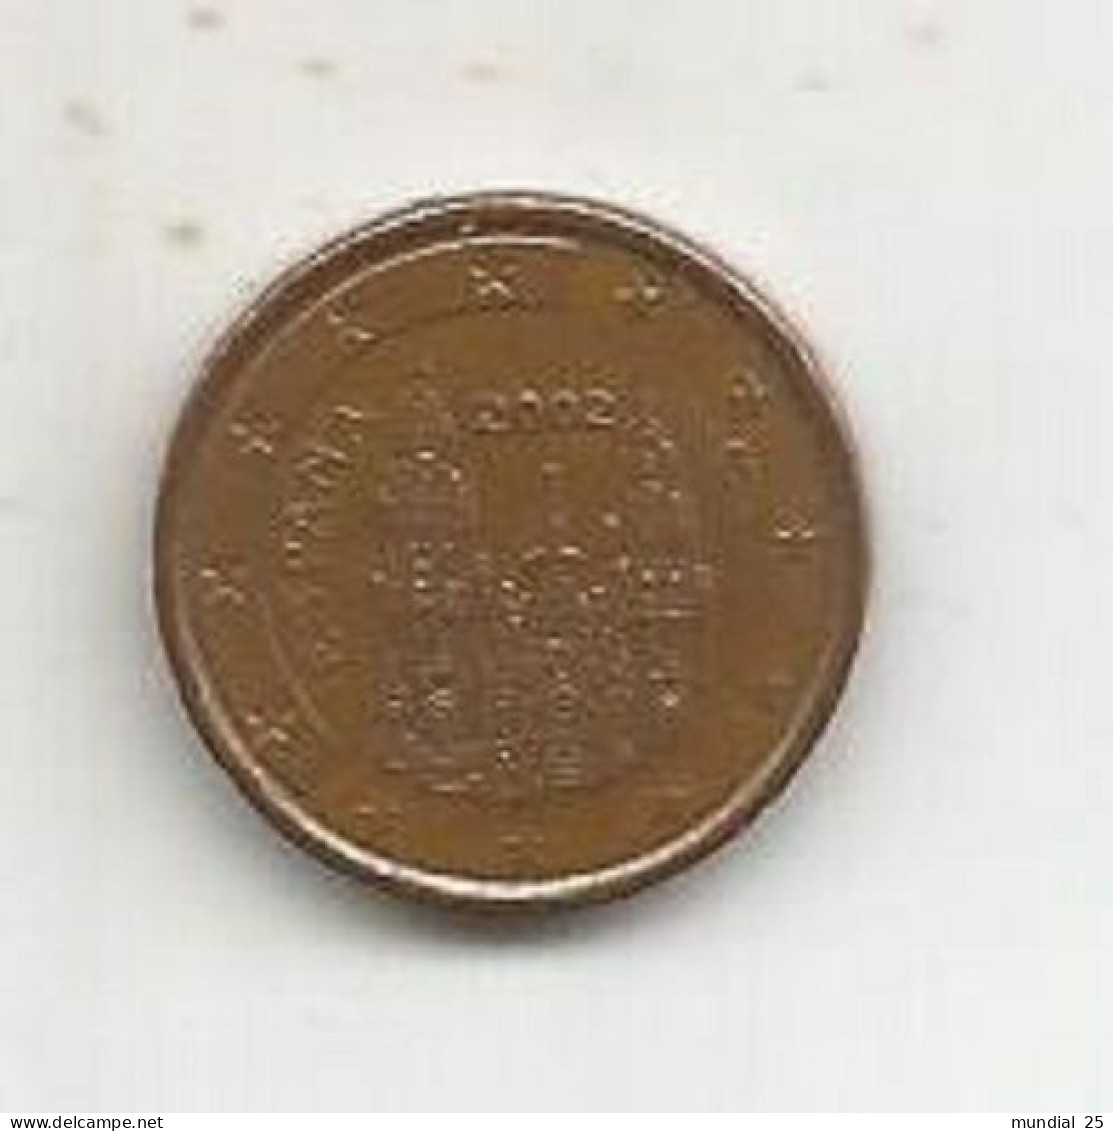 SPAIN 1 EURO CENT 2002 - Spain